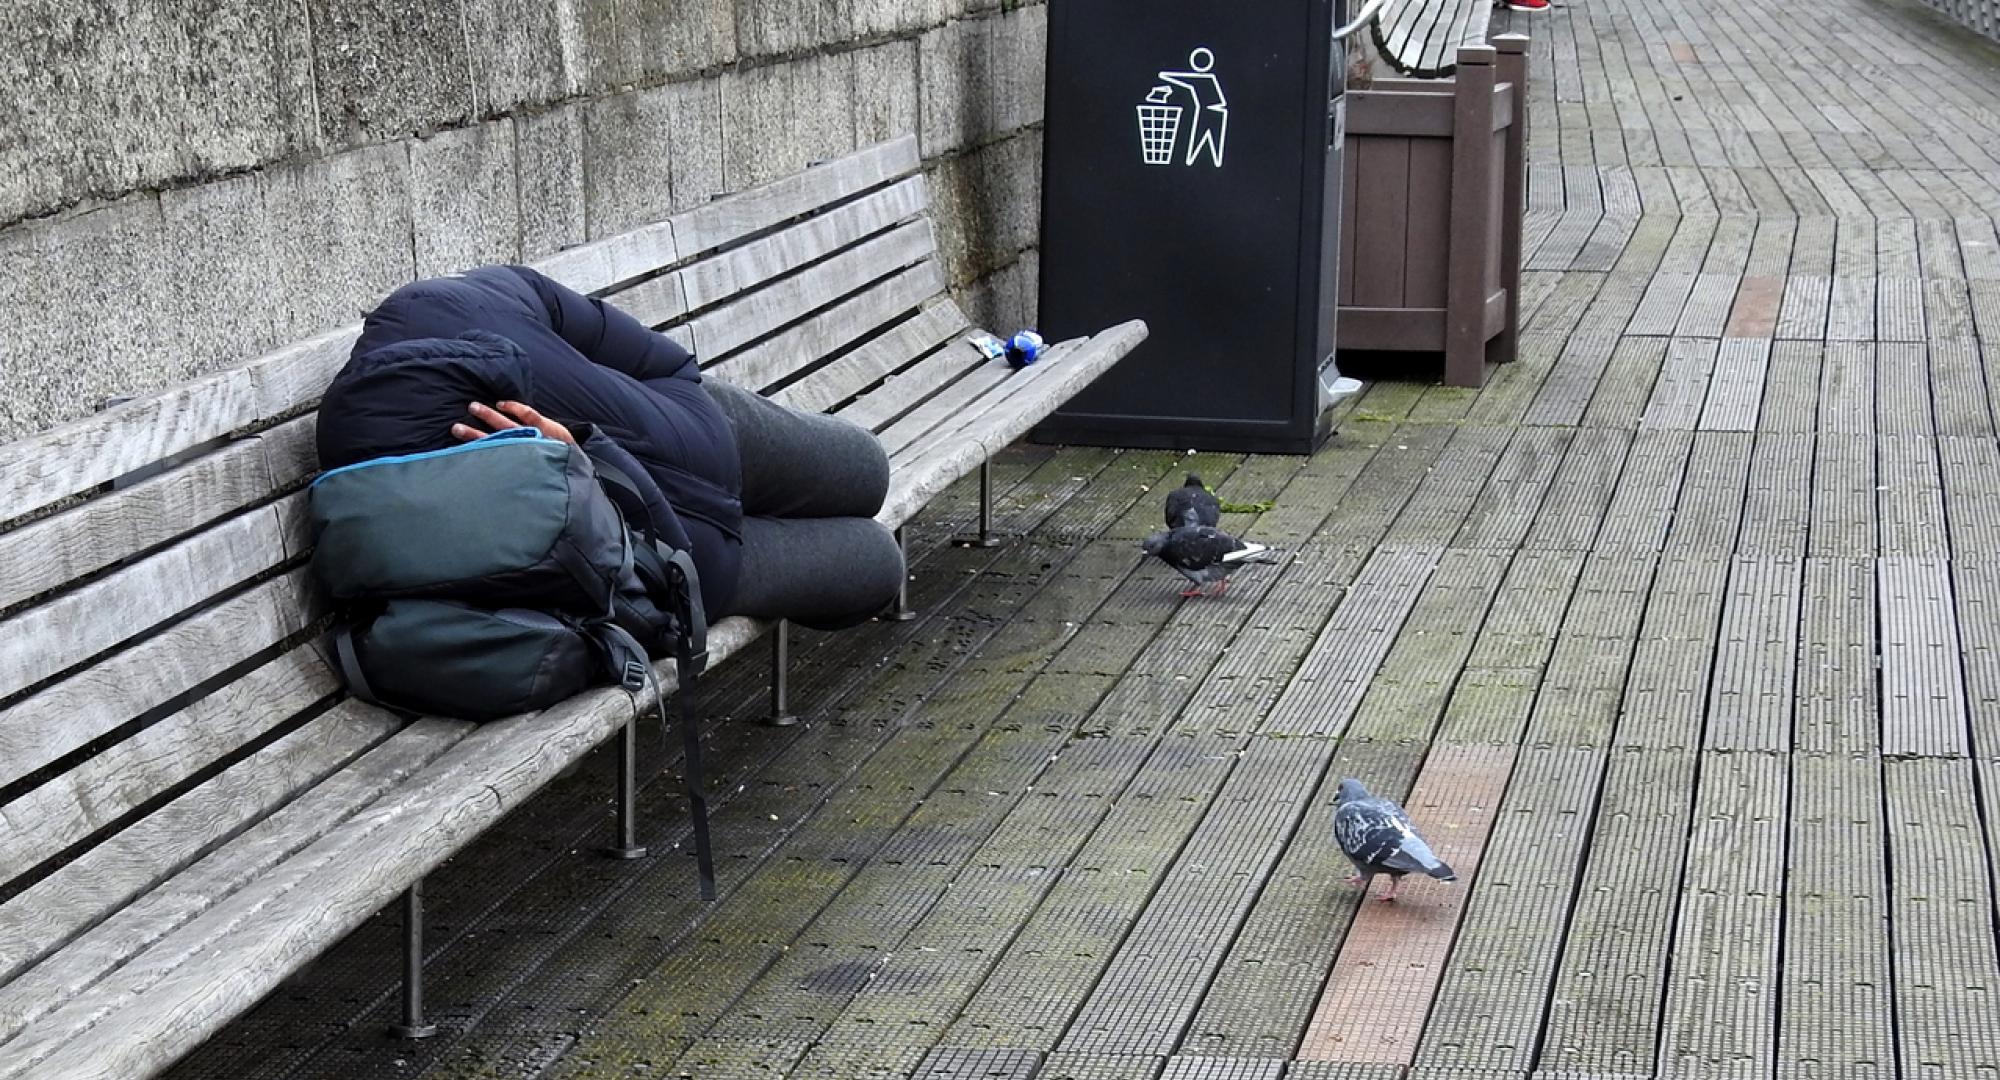 Homeless man sleeping on a bench